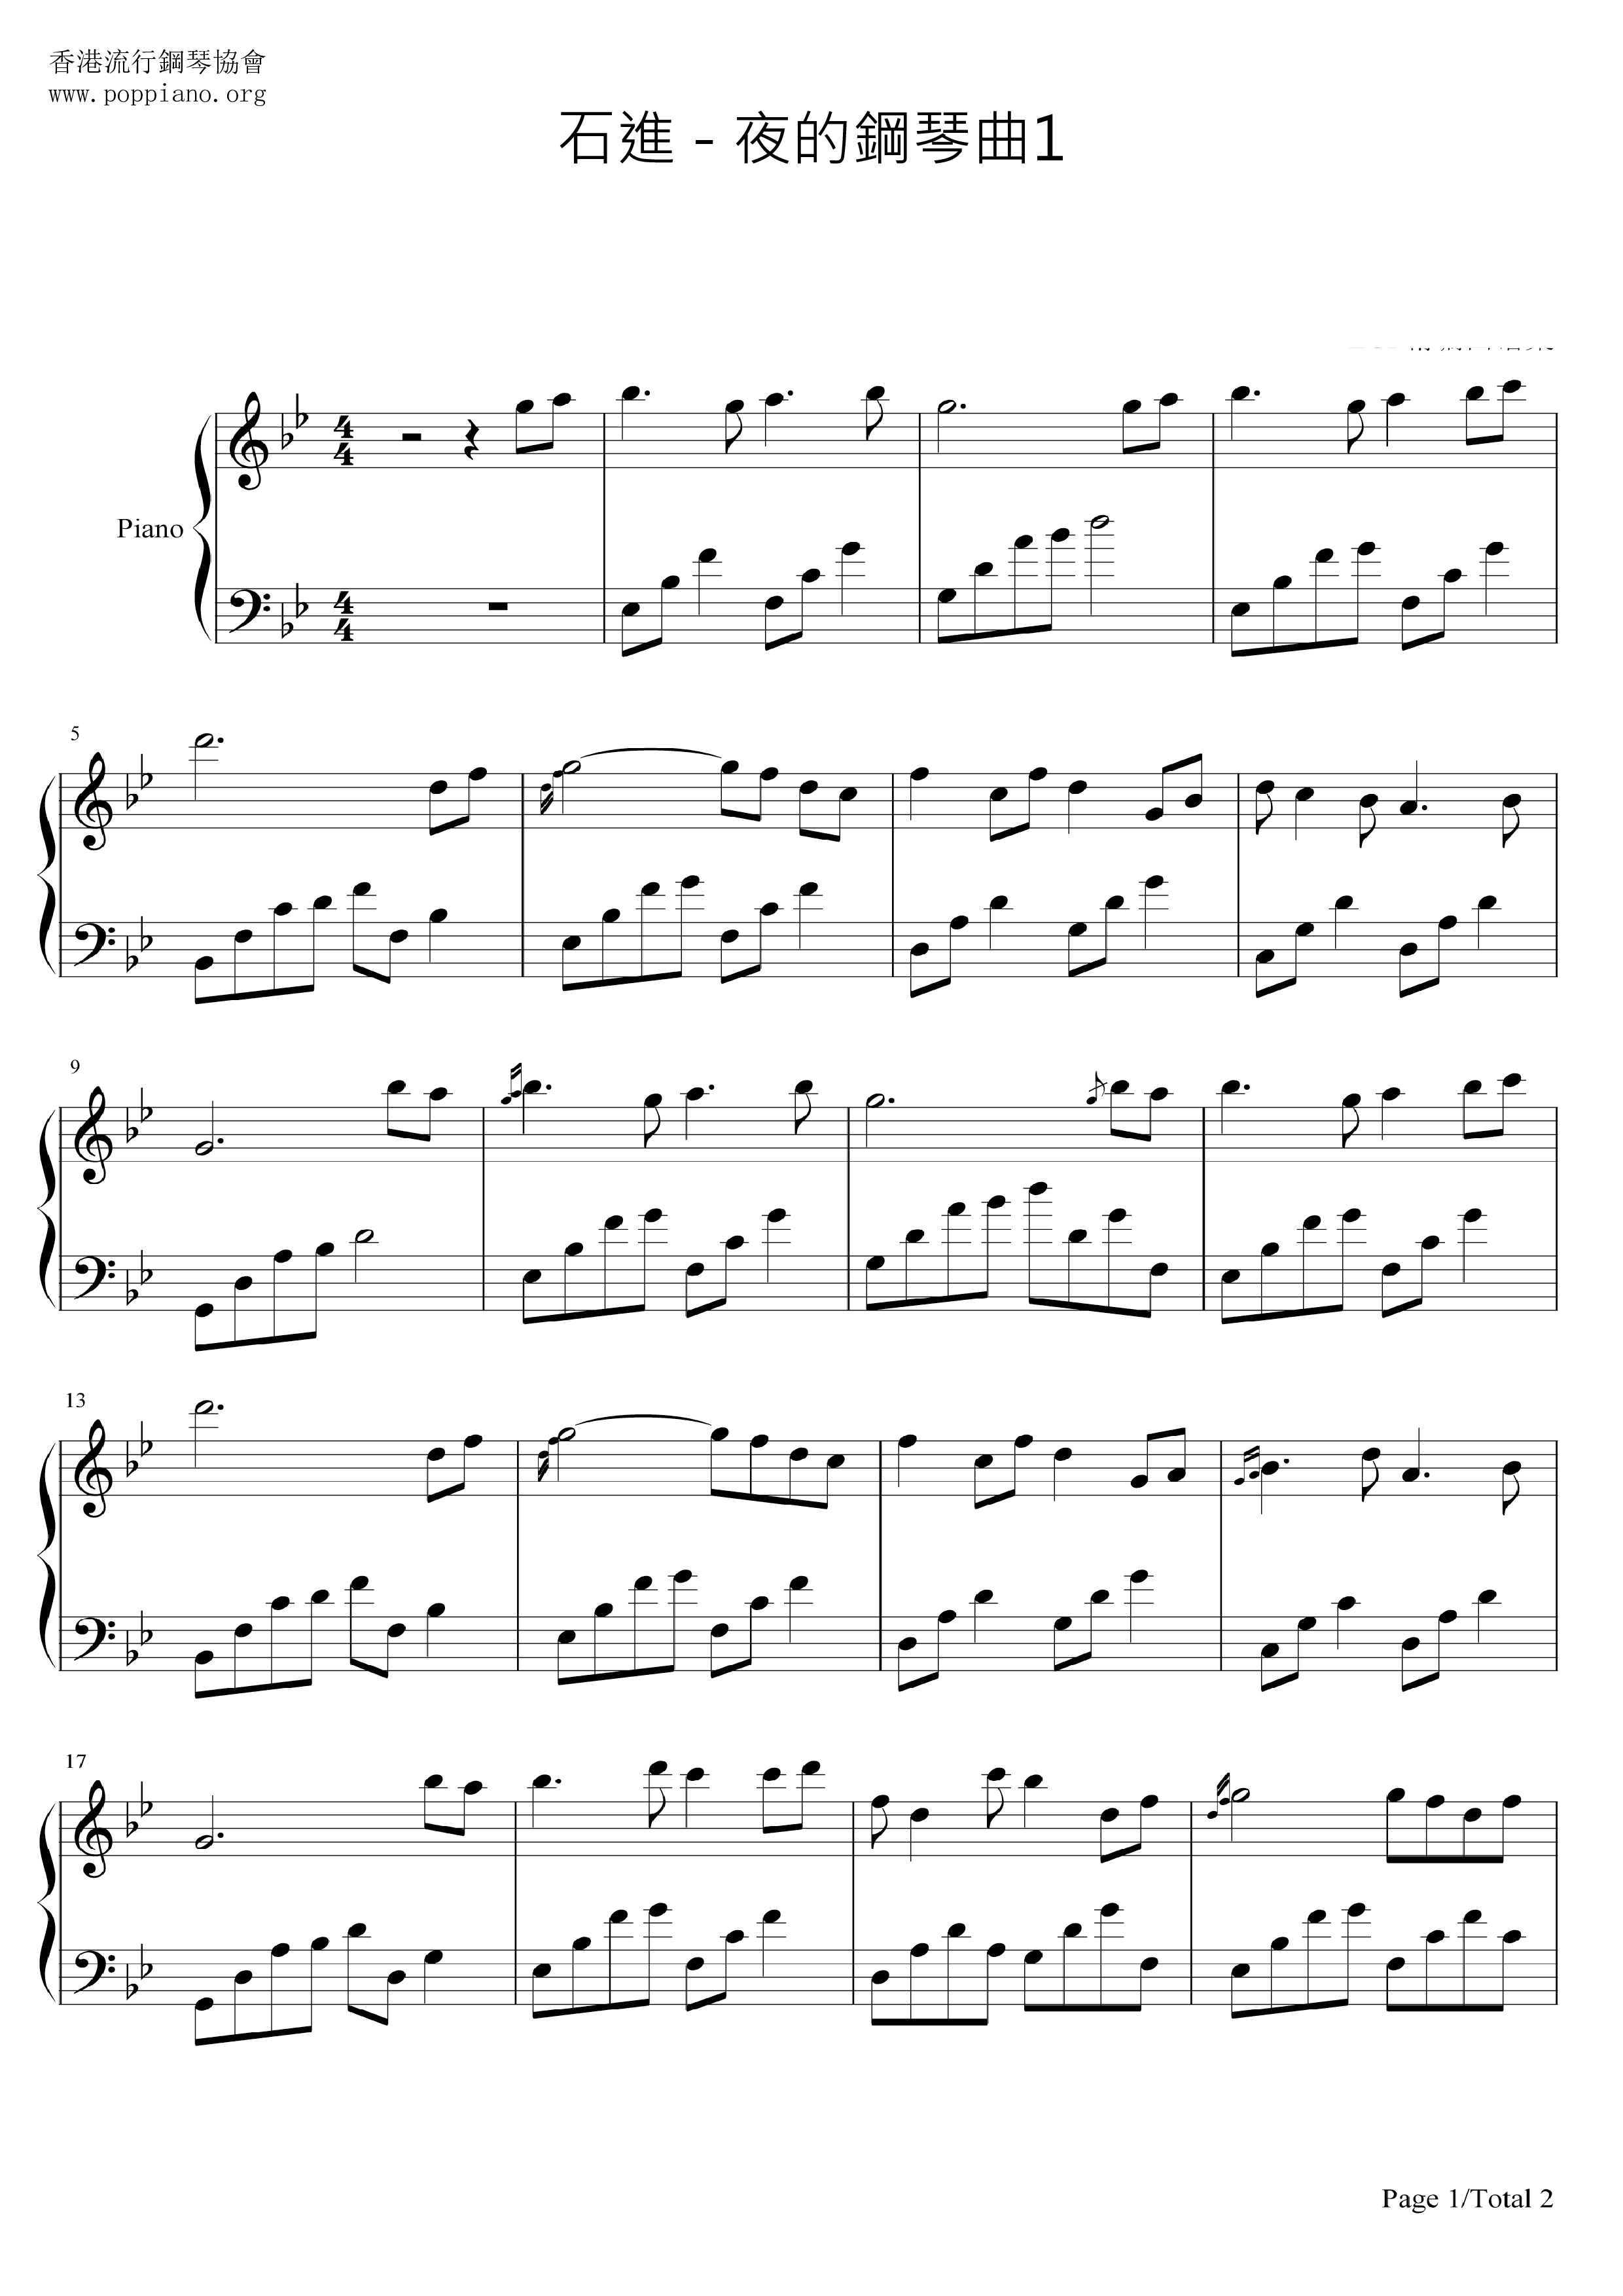 Melody Of The Night 1 Score